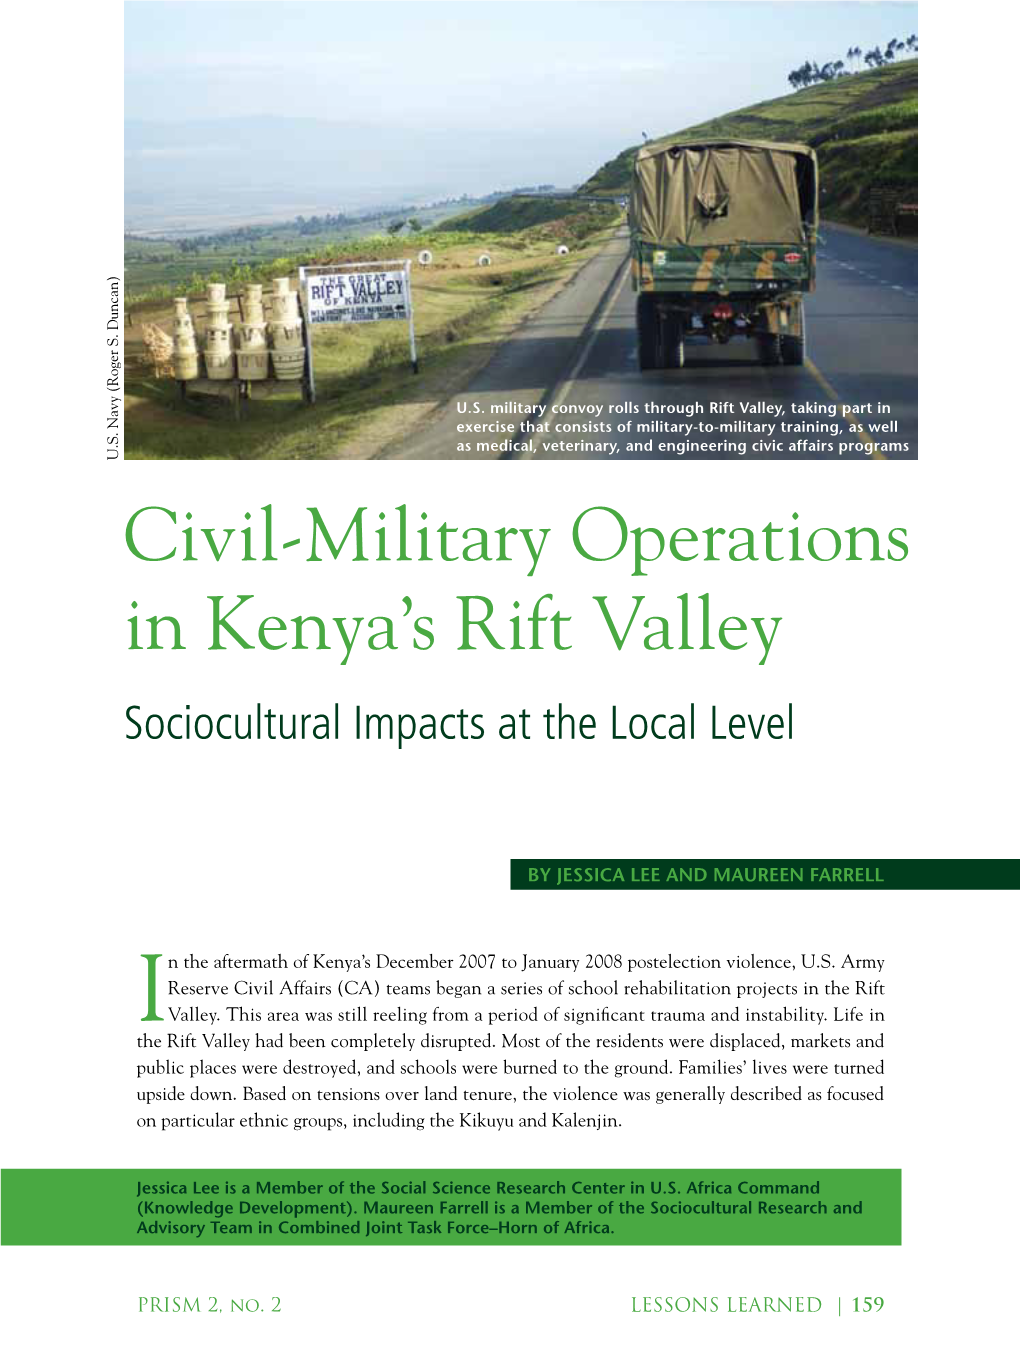 Civil-Military Operations in Kenya's Rift Valley